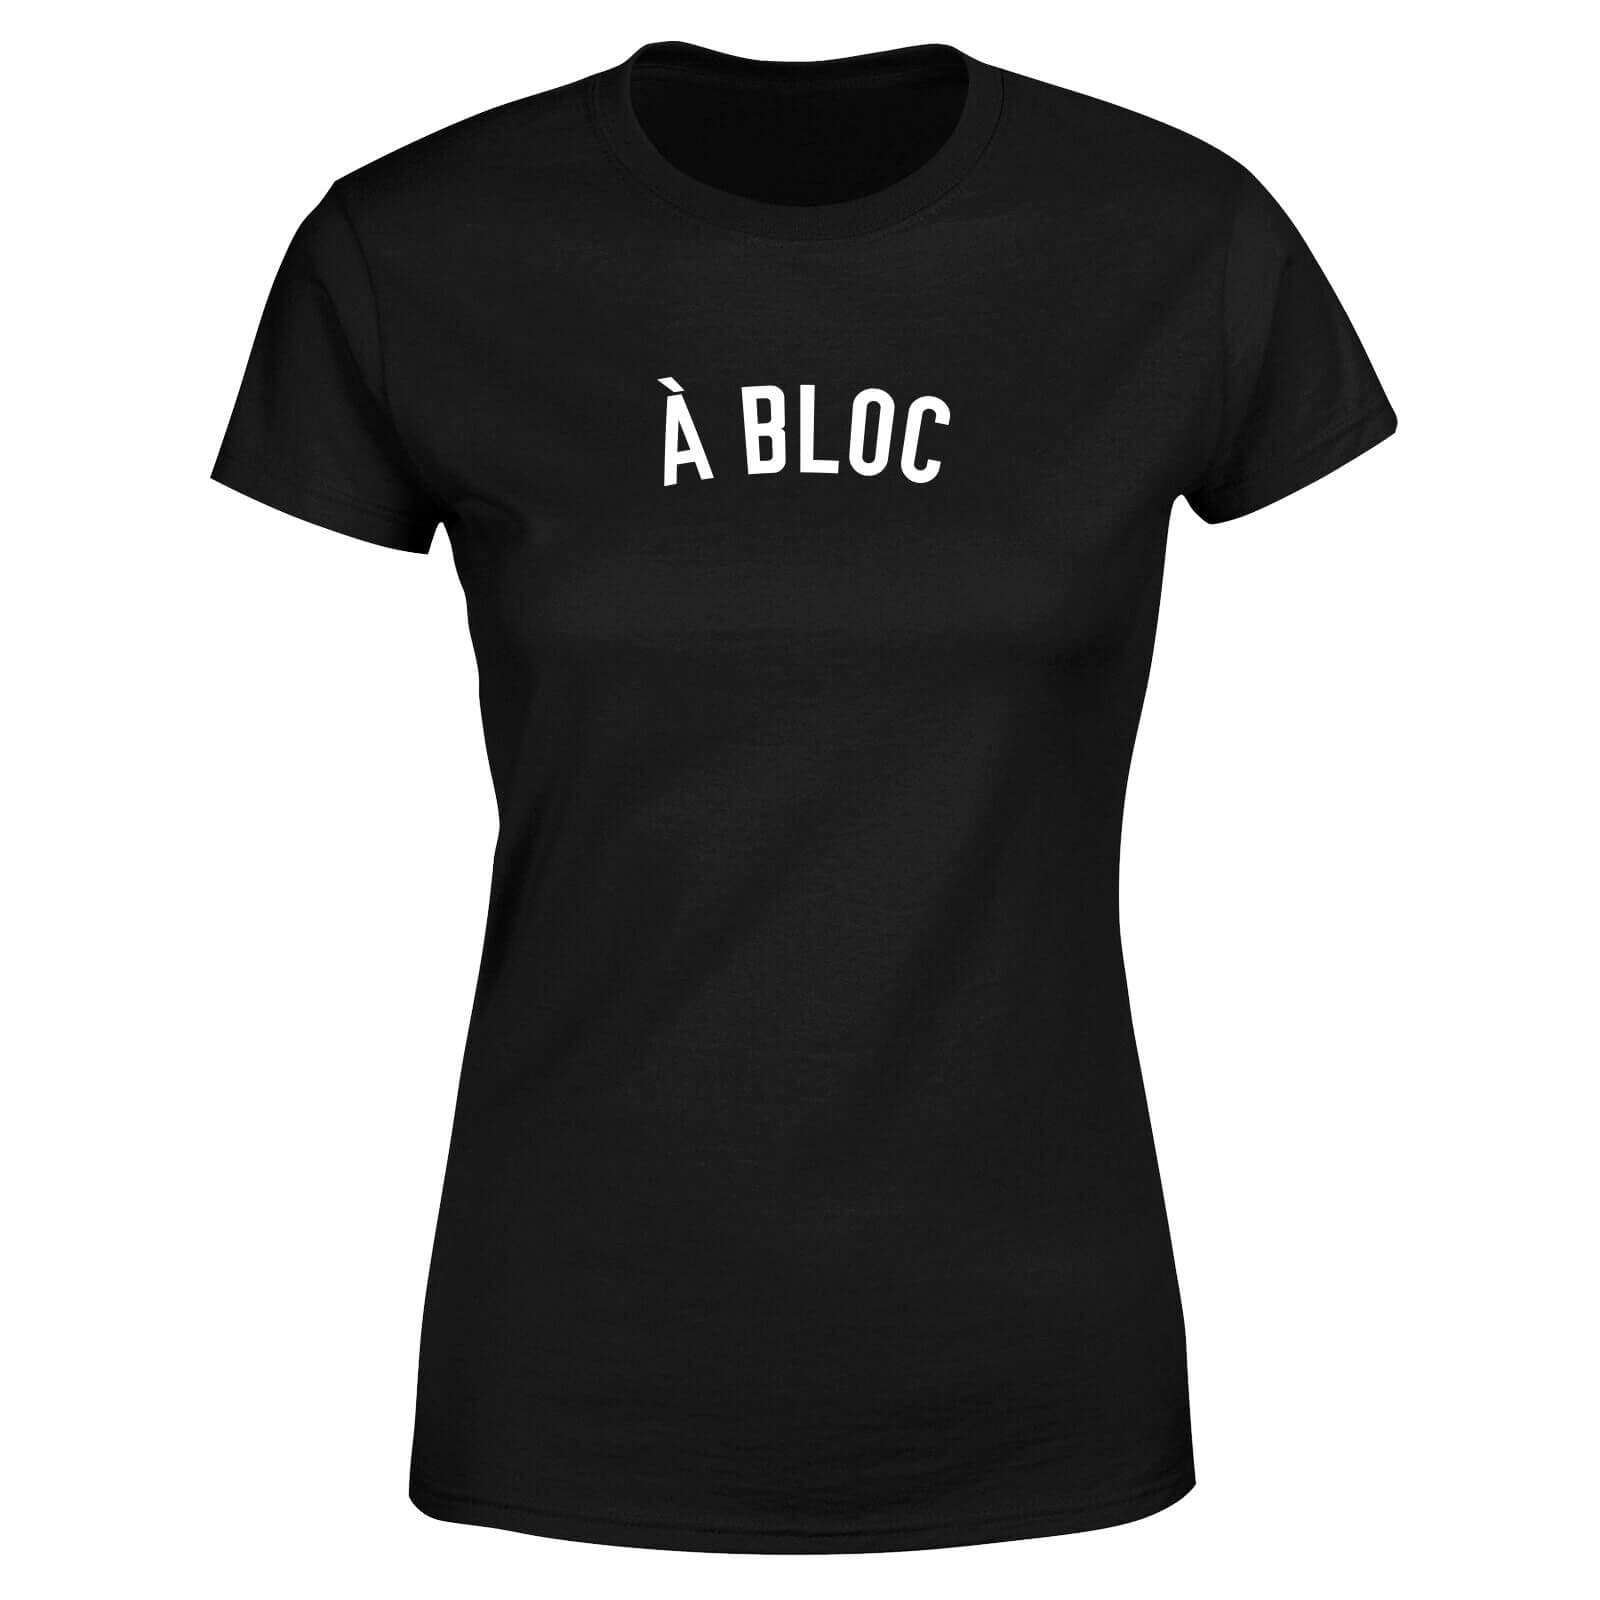 A Bloc Women's T-Shirt - Black - XXL - Black